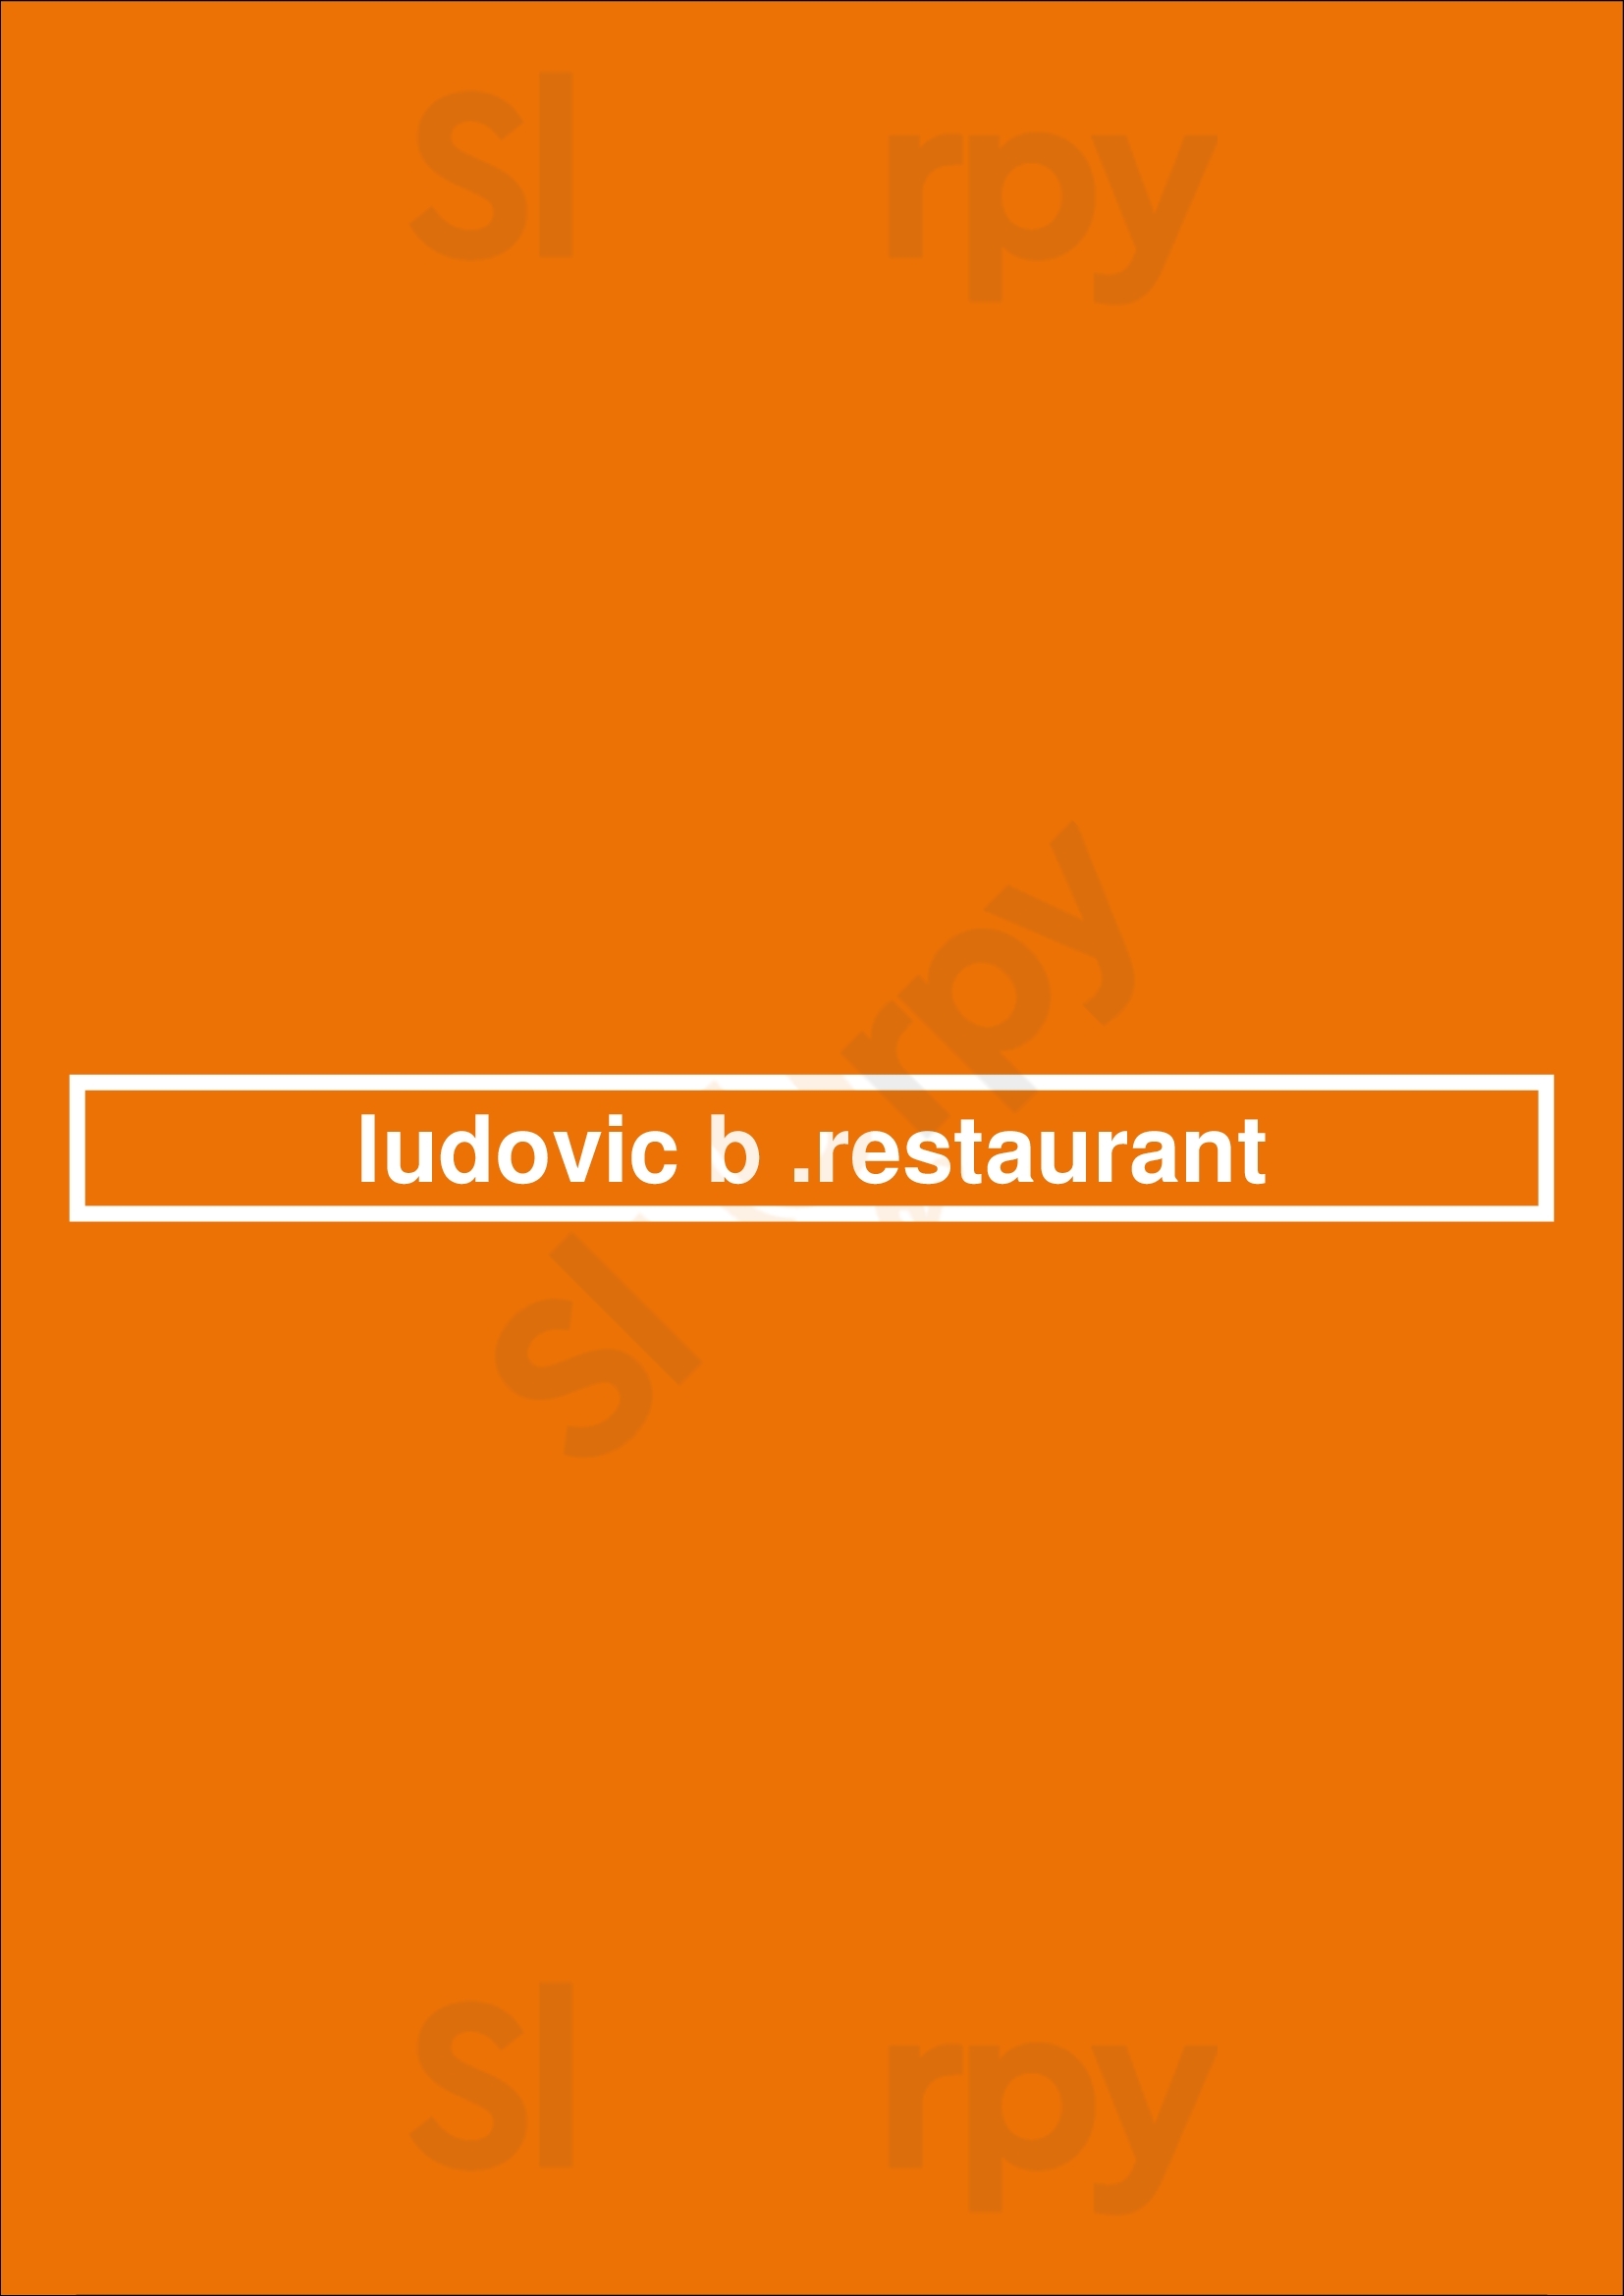 Ludovic B .restaurant Lyon Menu - 1